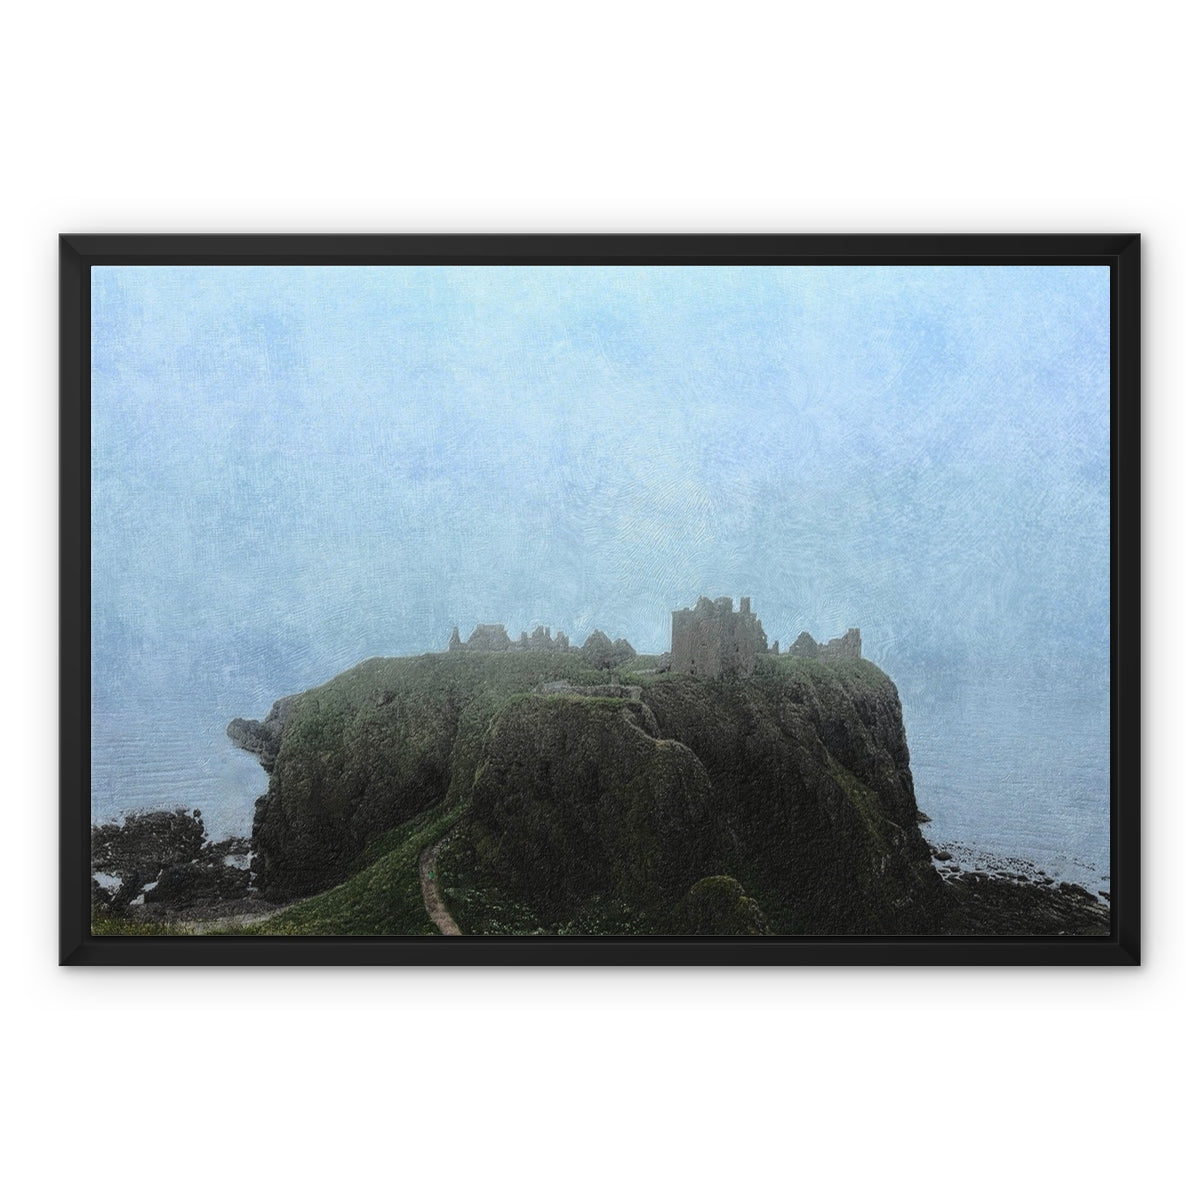 Dunnottar Castle Mist Painting | Framed Canvas From Scotland-Floating Framed Canvas Prints-Scottish Castles Art Gallery-24"x18"-Black Frame-Paintings, Prints, Homeware, Art Gifts From Scotland By Scottish Artist Kevin Hunter